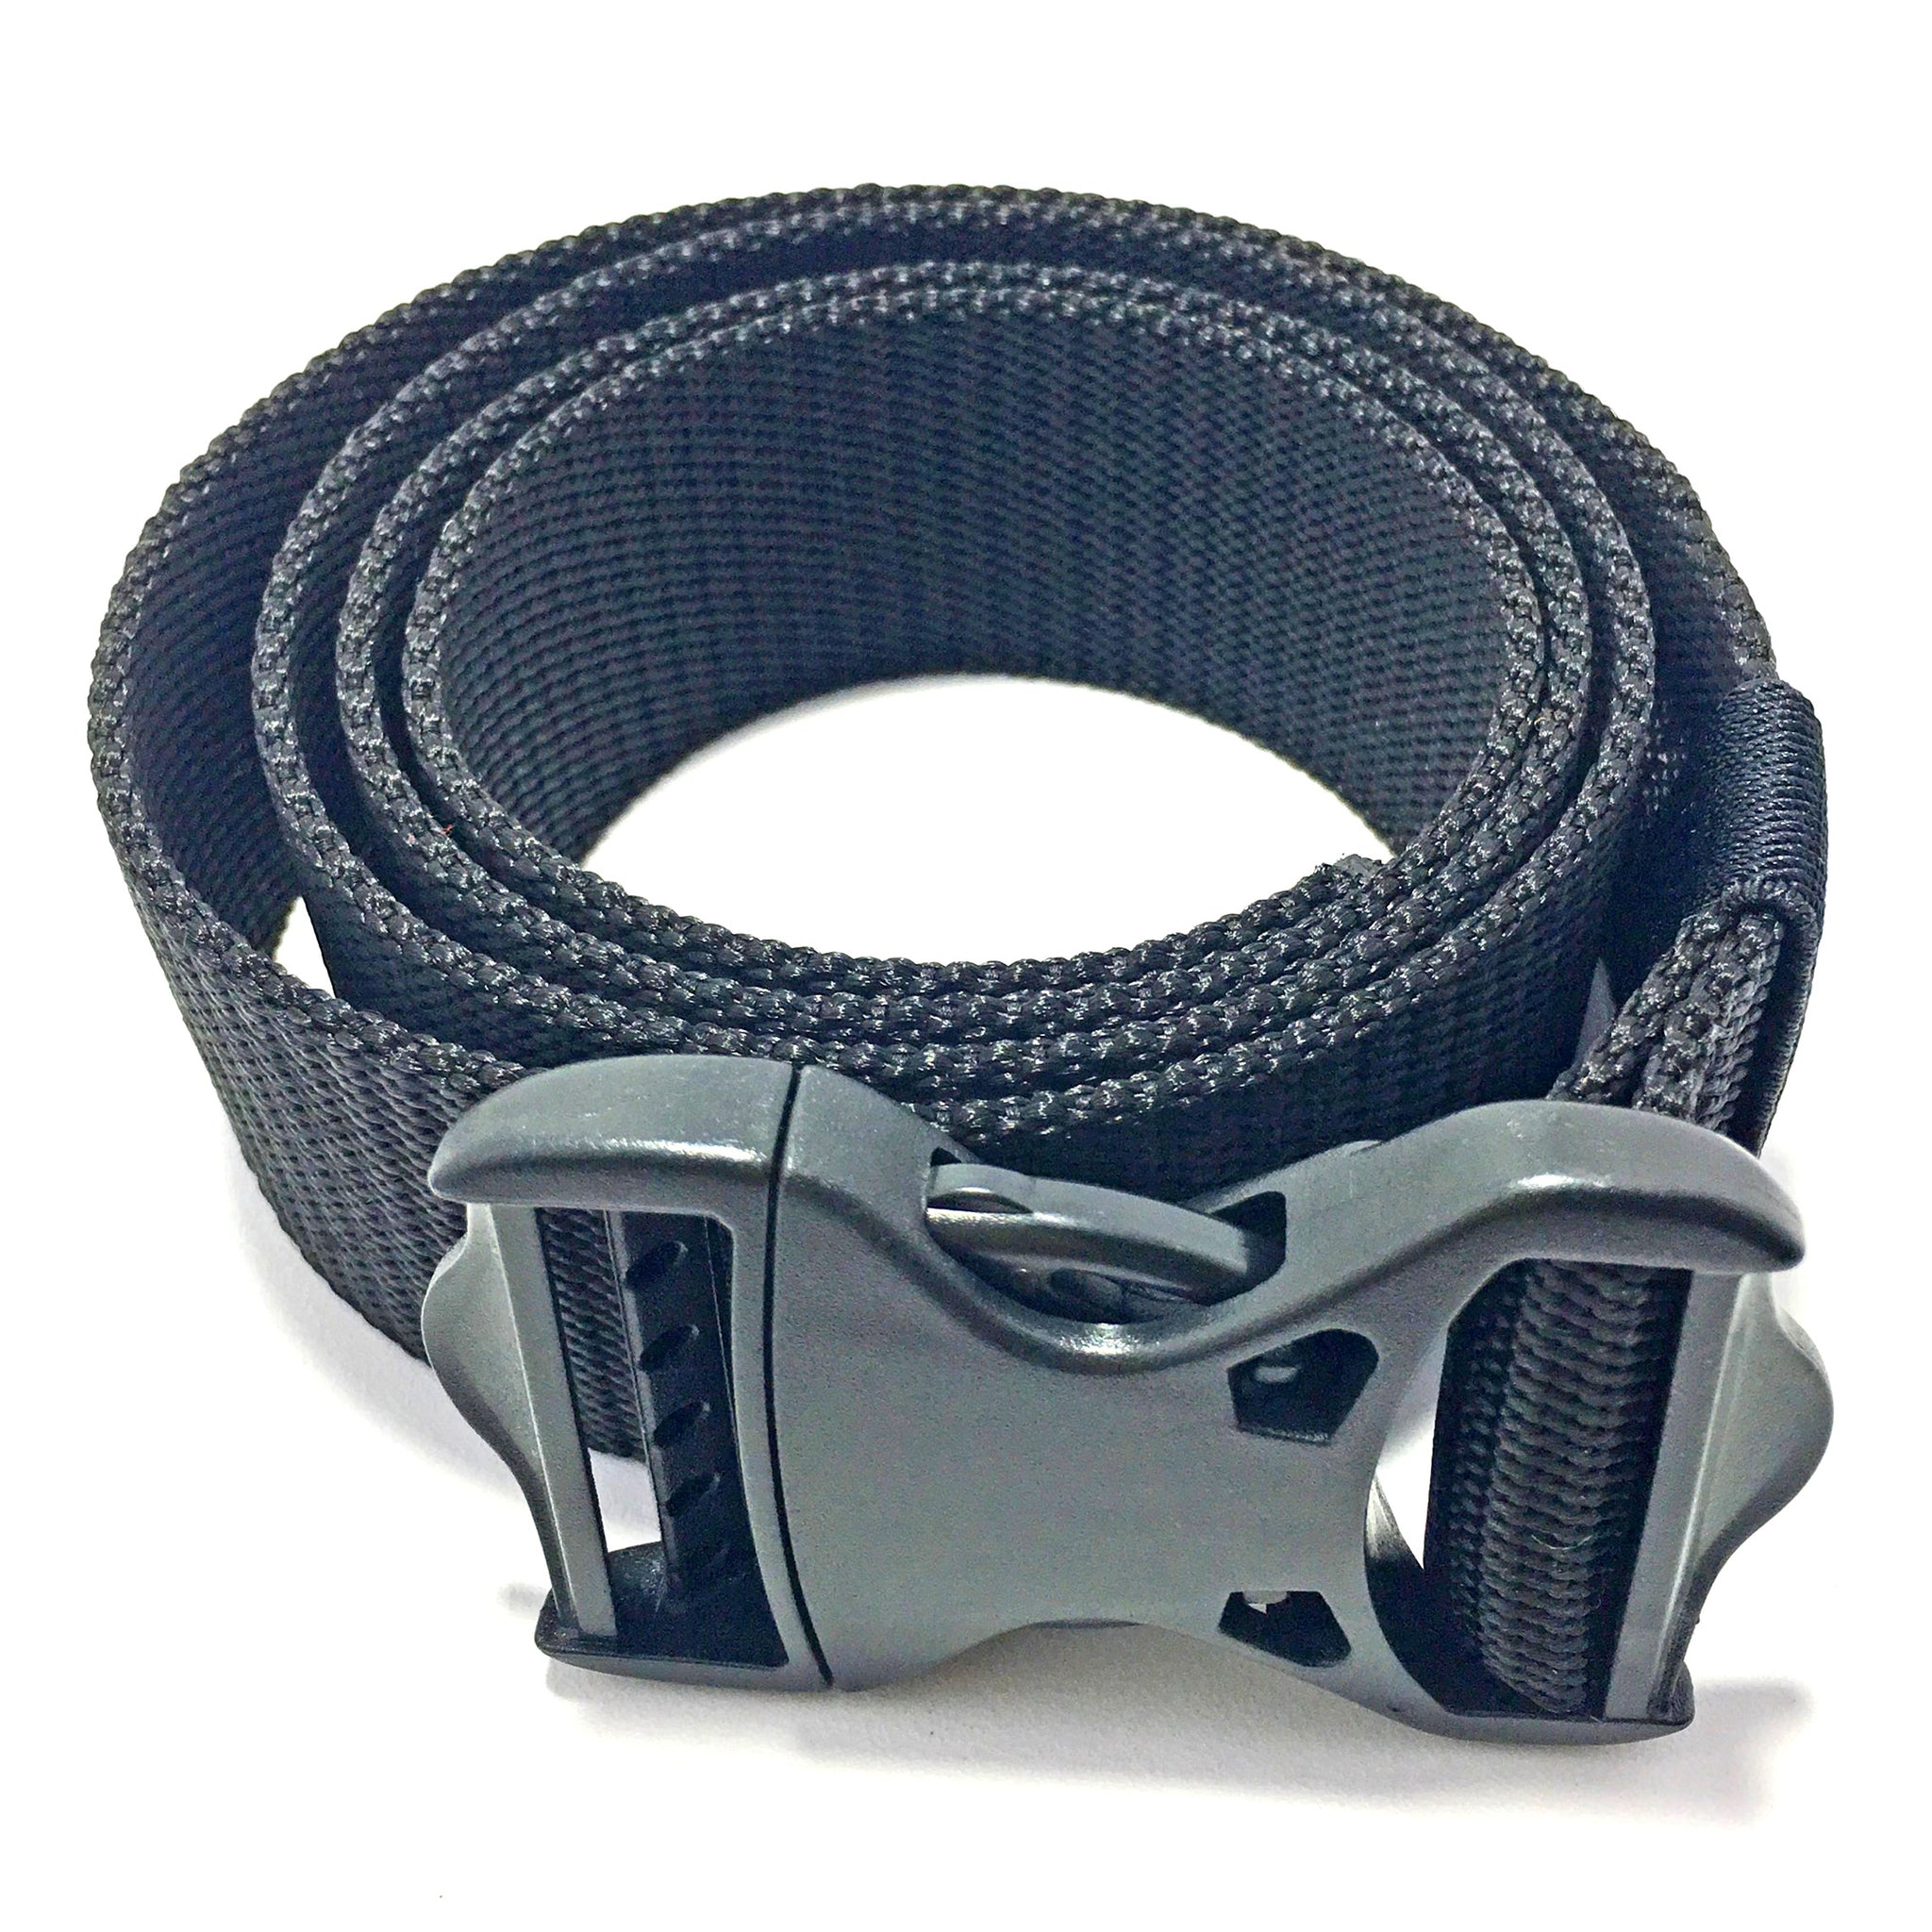 Ficuster Unisex Push Lock Plastic Buckle Black Nylon Canvas Braided Belt